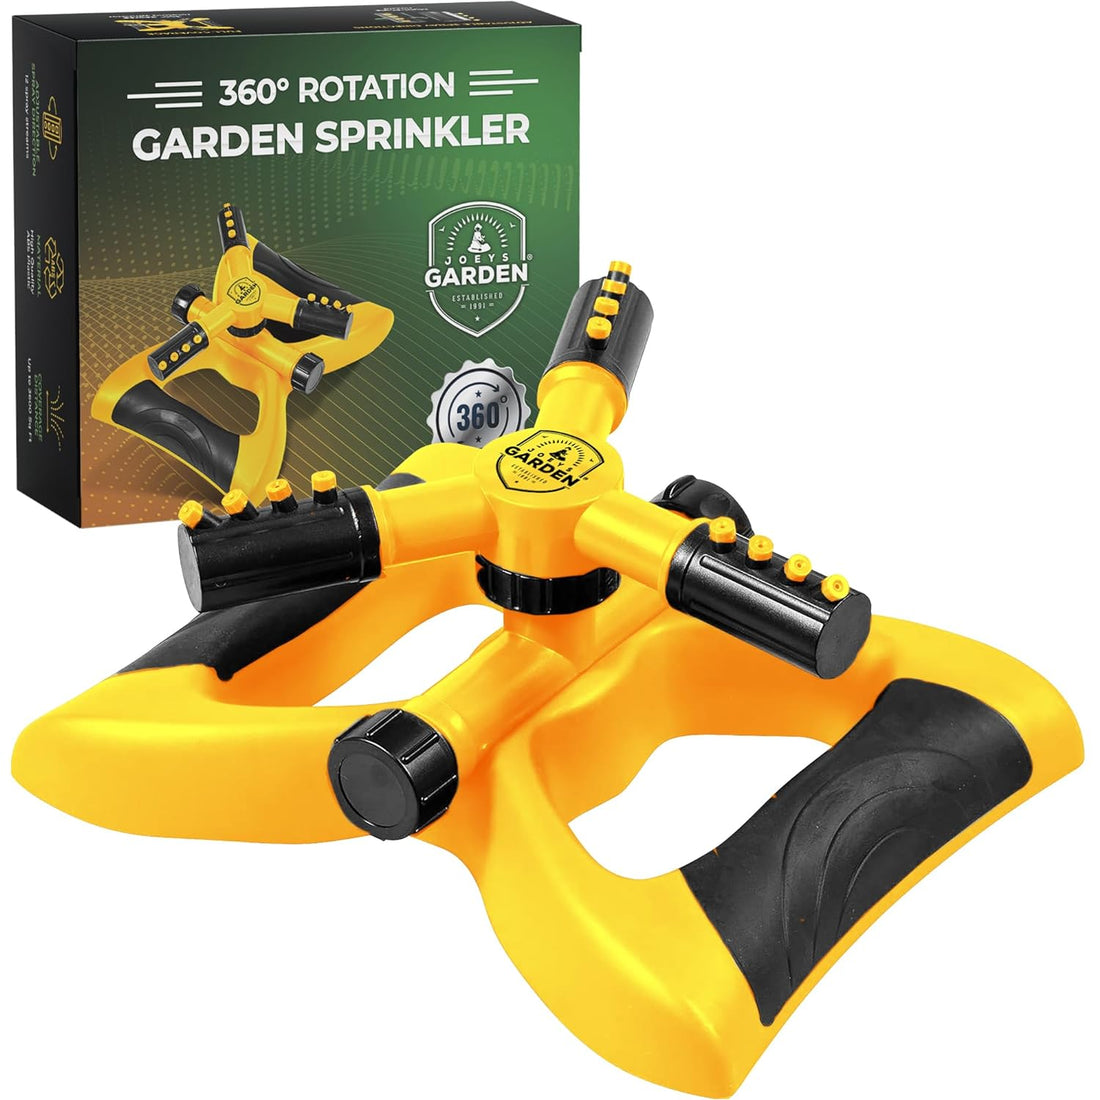 Joeys Sprinkler for Yard, Rotating Garden Sprinkler for Large Area Coverage, Lawn and Yard Sprinklers (Yellow)